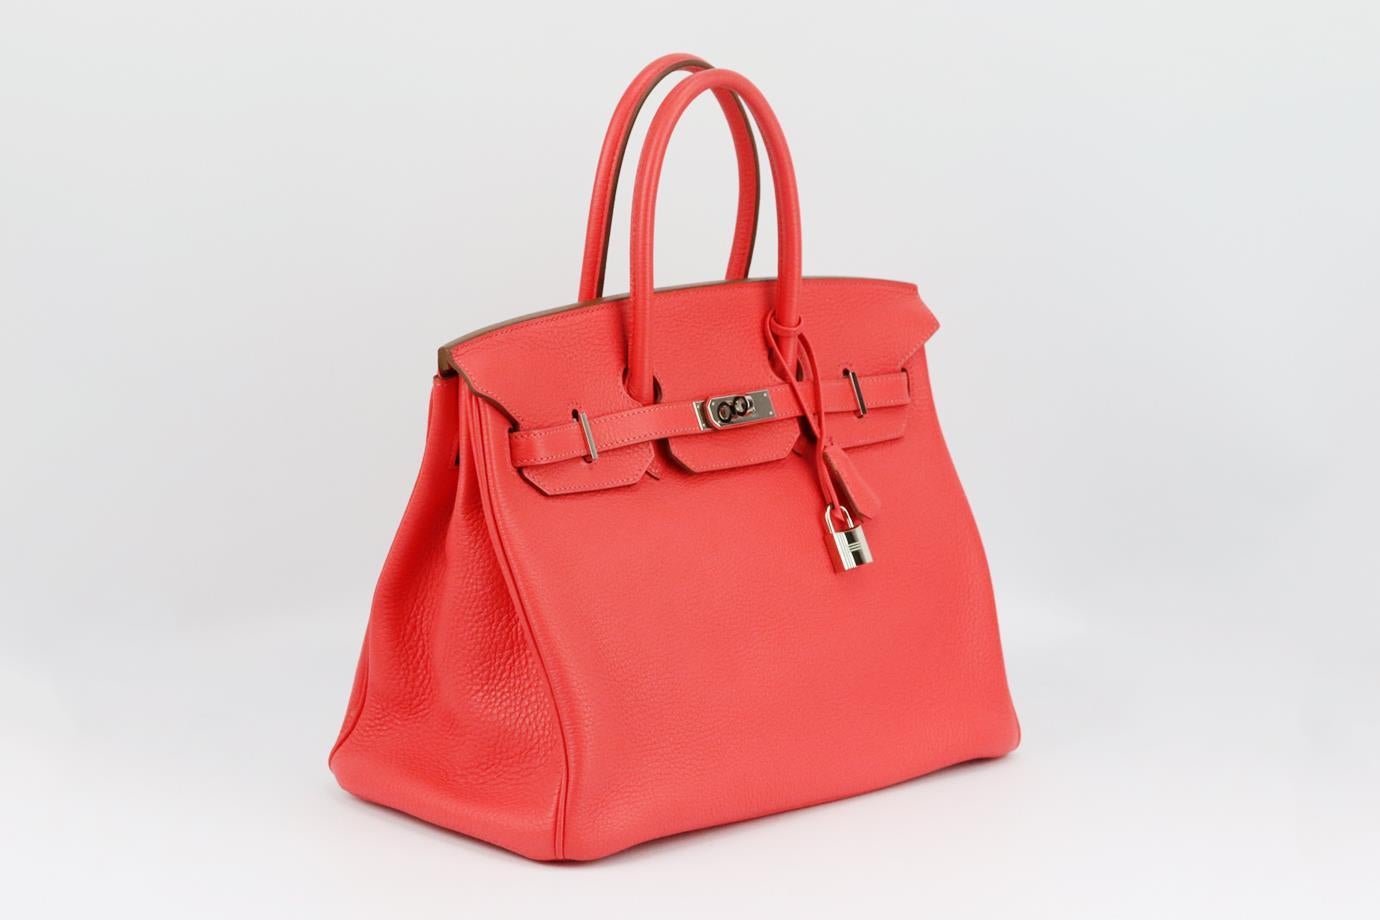 Women's Hermès 2012 Birkin 35cm Togo Leather Bag For Sale